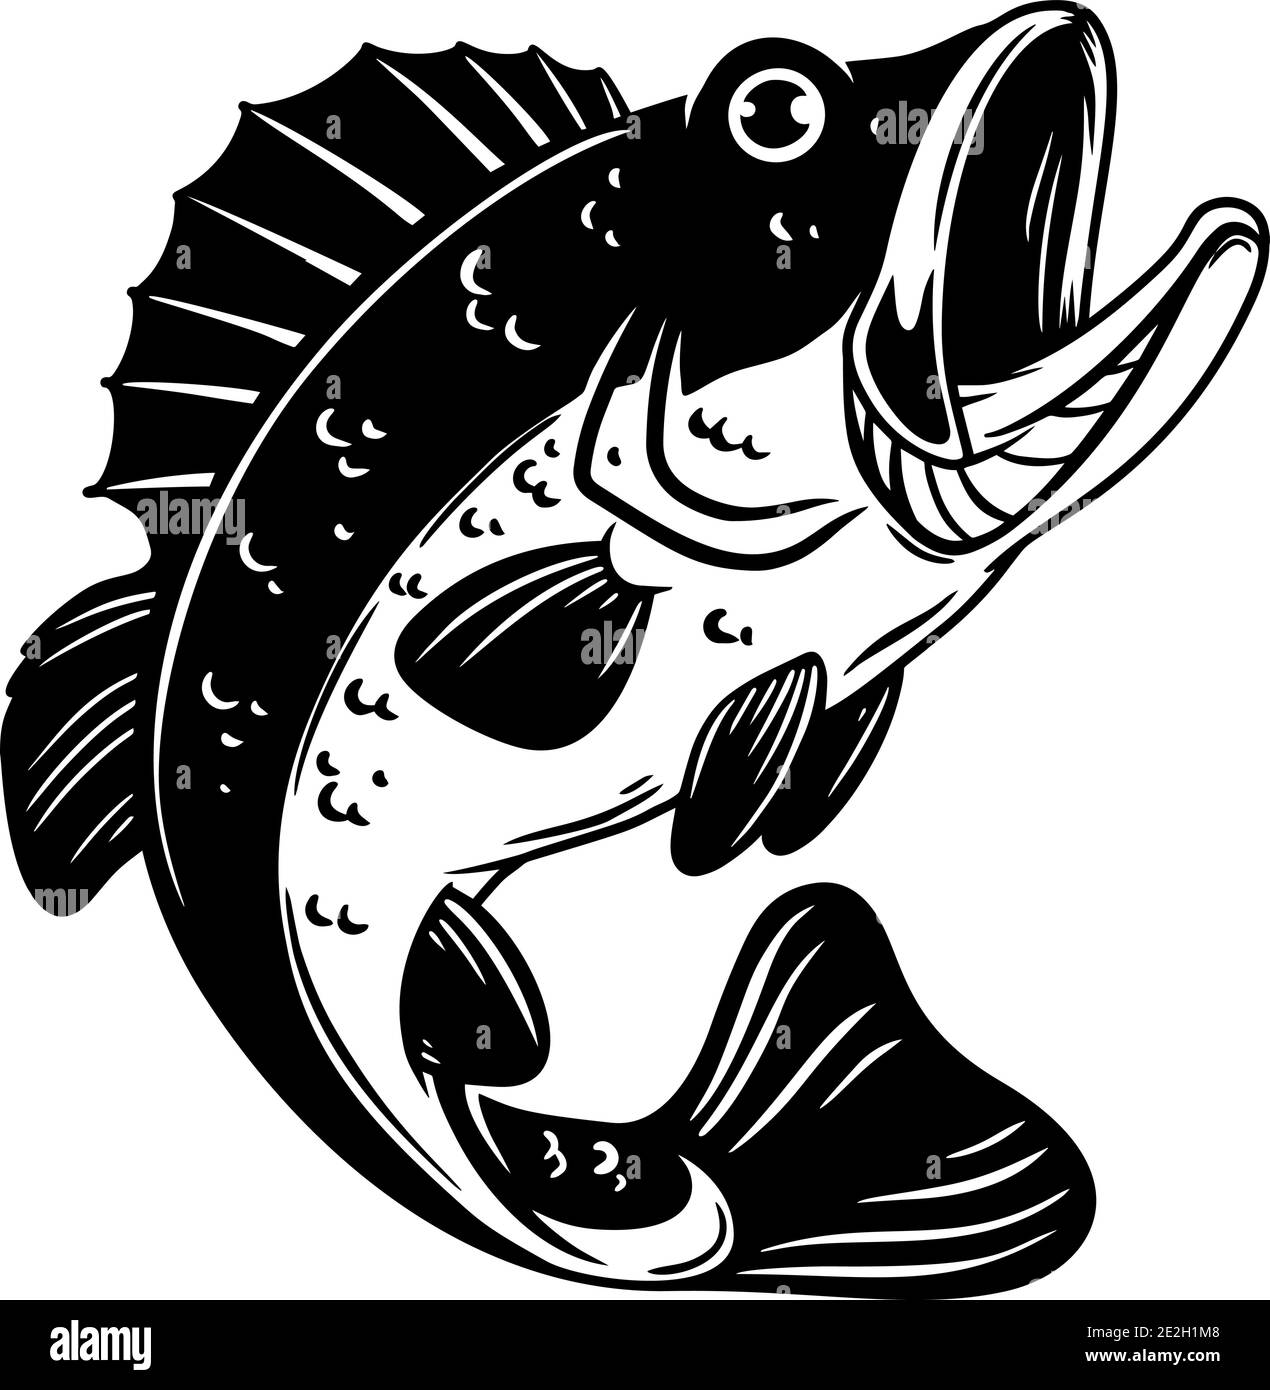 Illustration of bass fish. Big perch. Perch fishing. Design element for logo, emblem, sign, poster, card, banner. Vector illustration Stock Vector